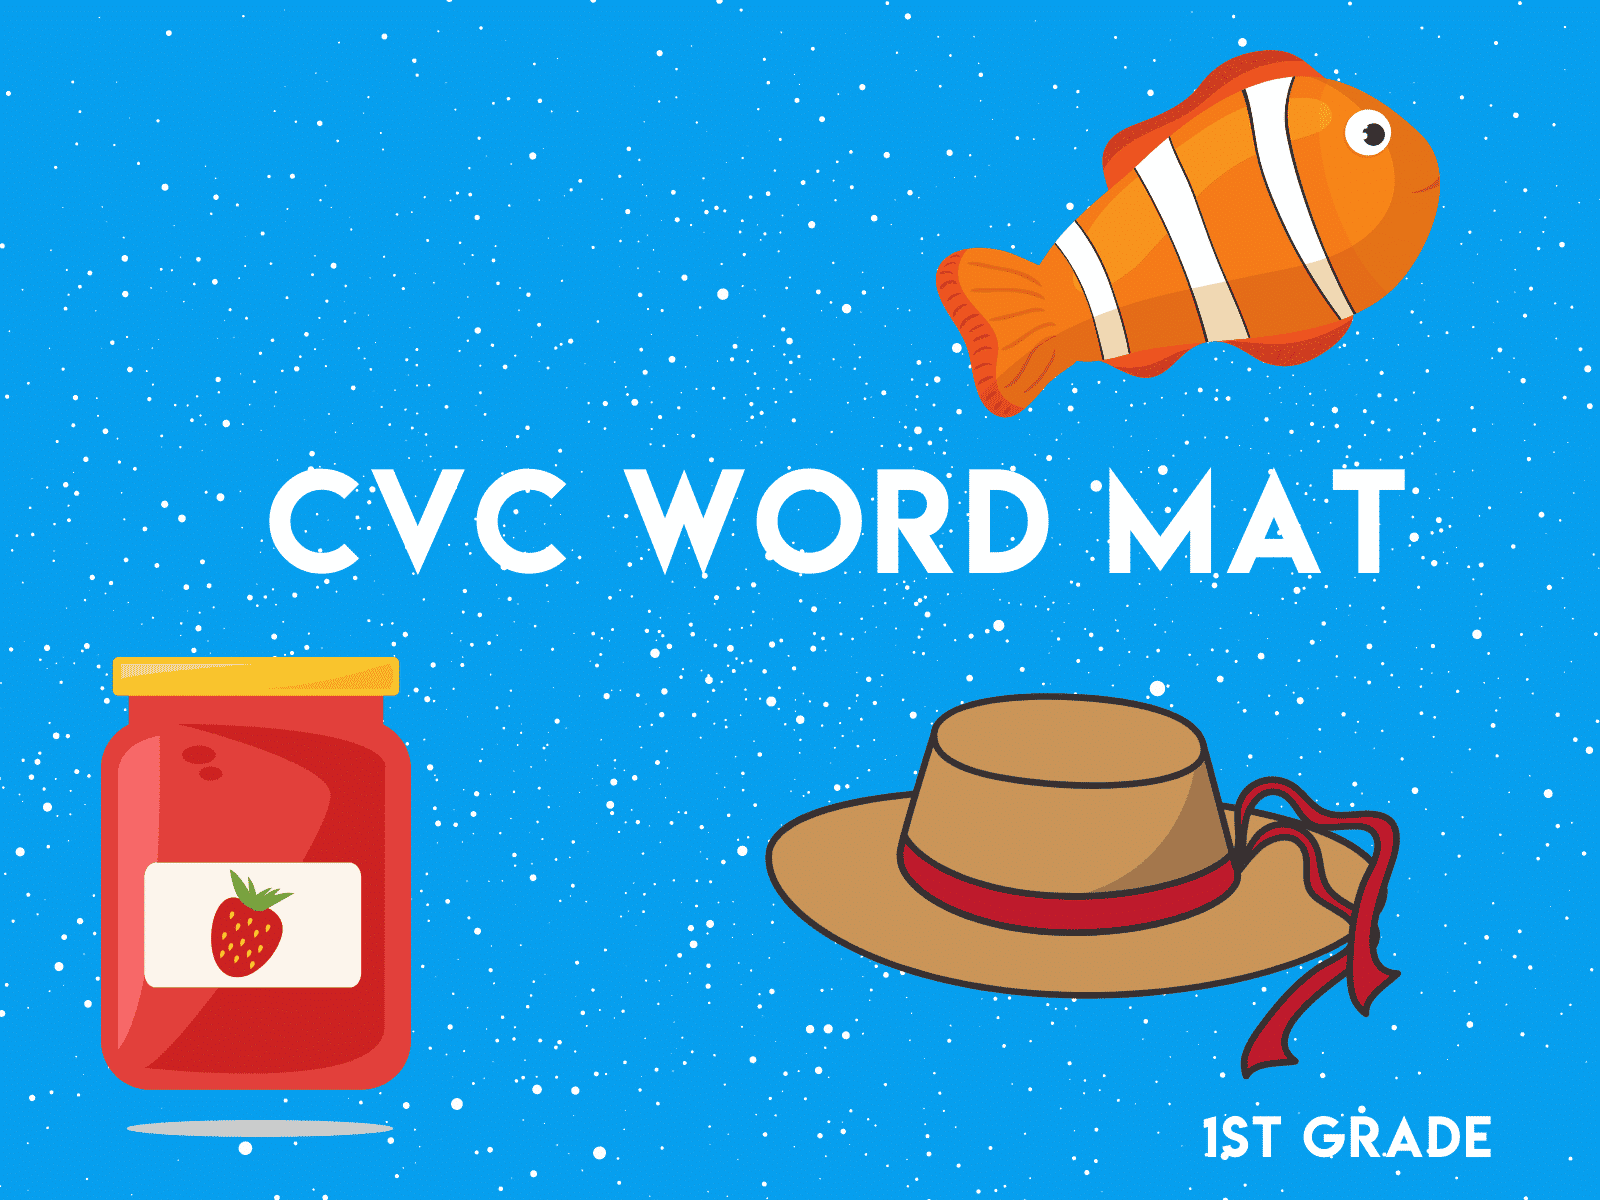 Free first grade worksheet to practice spelling CVC words.